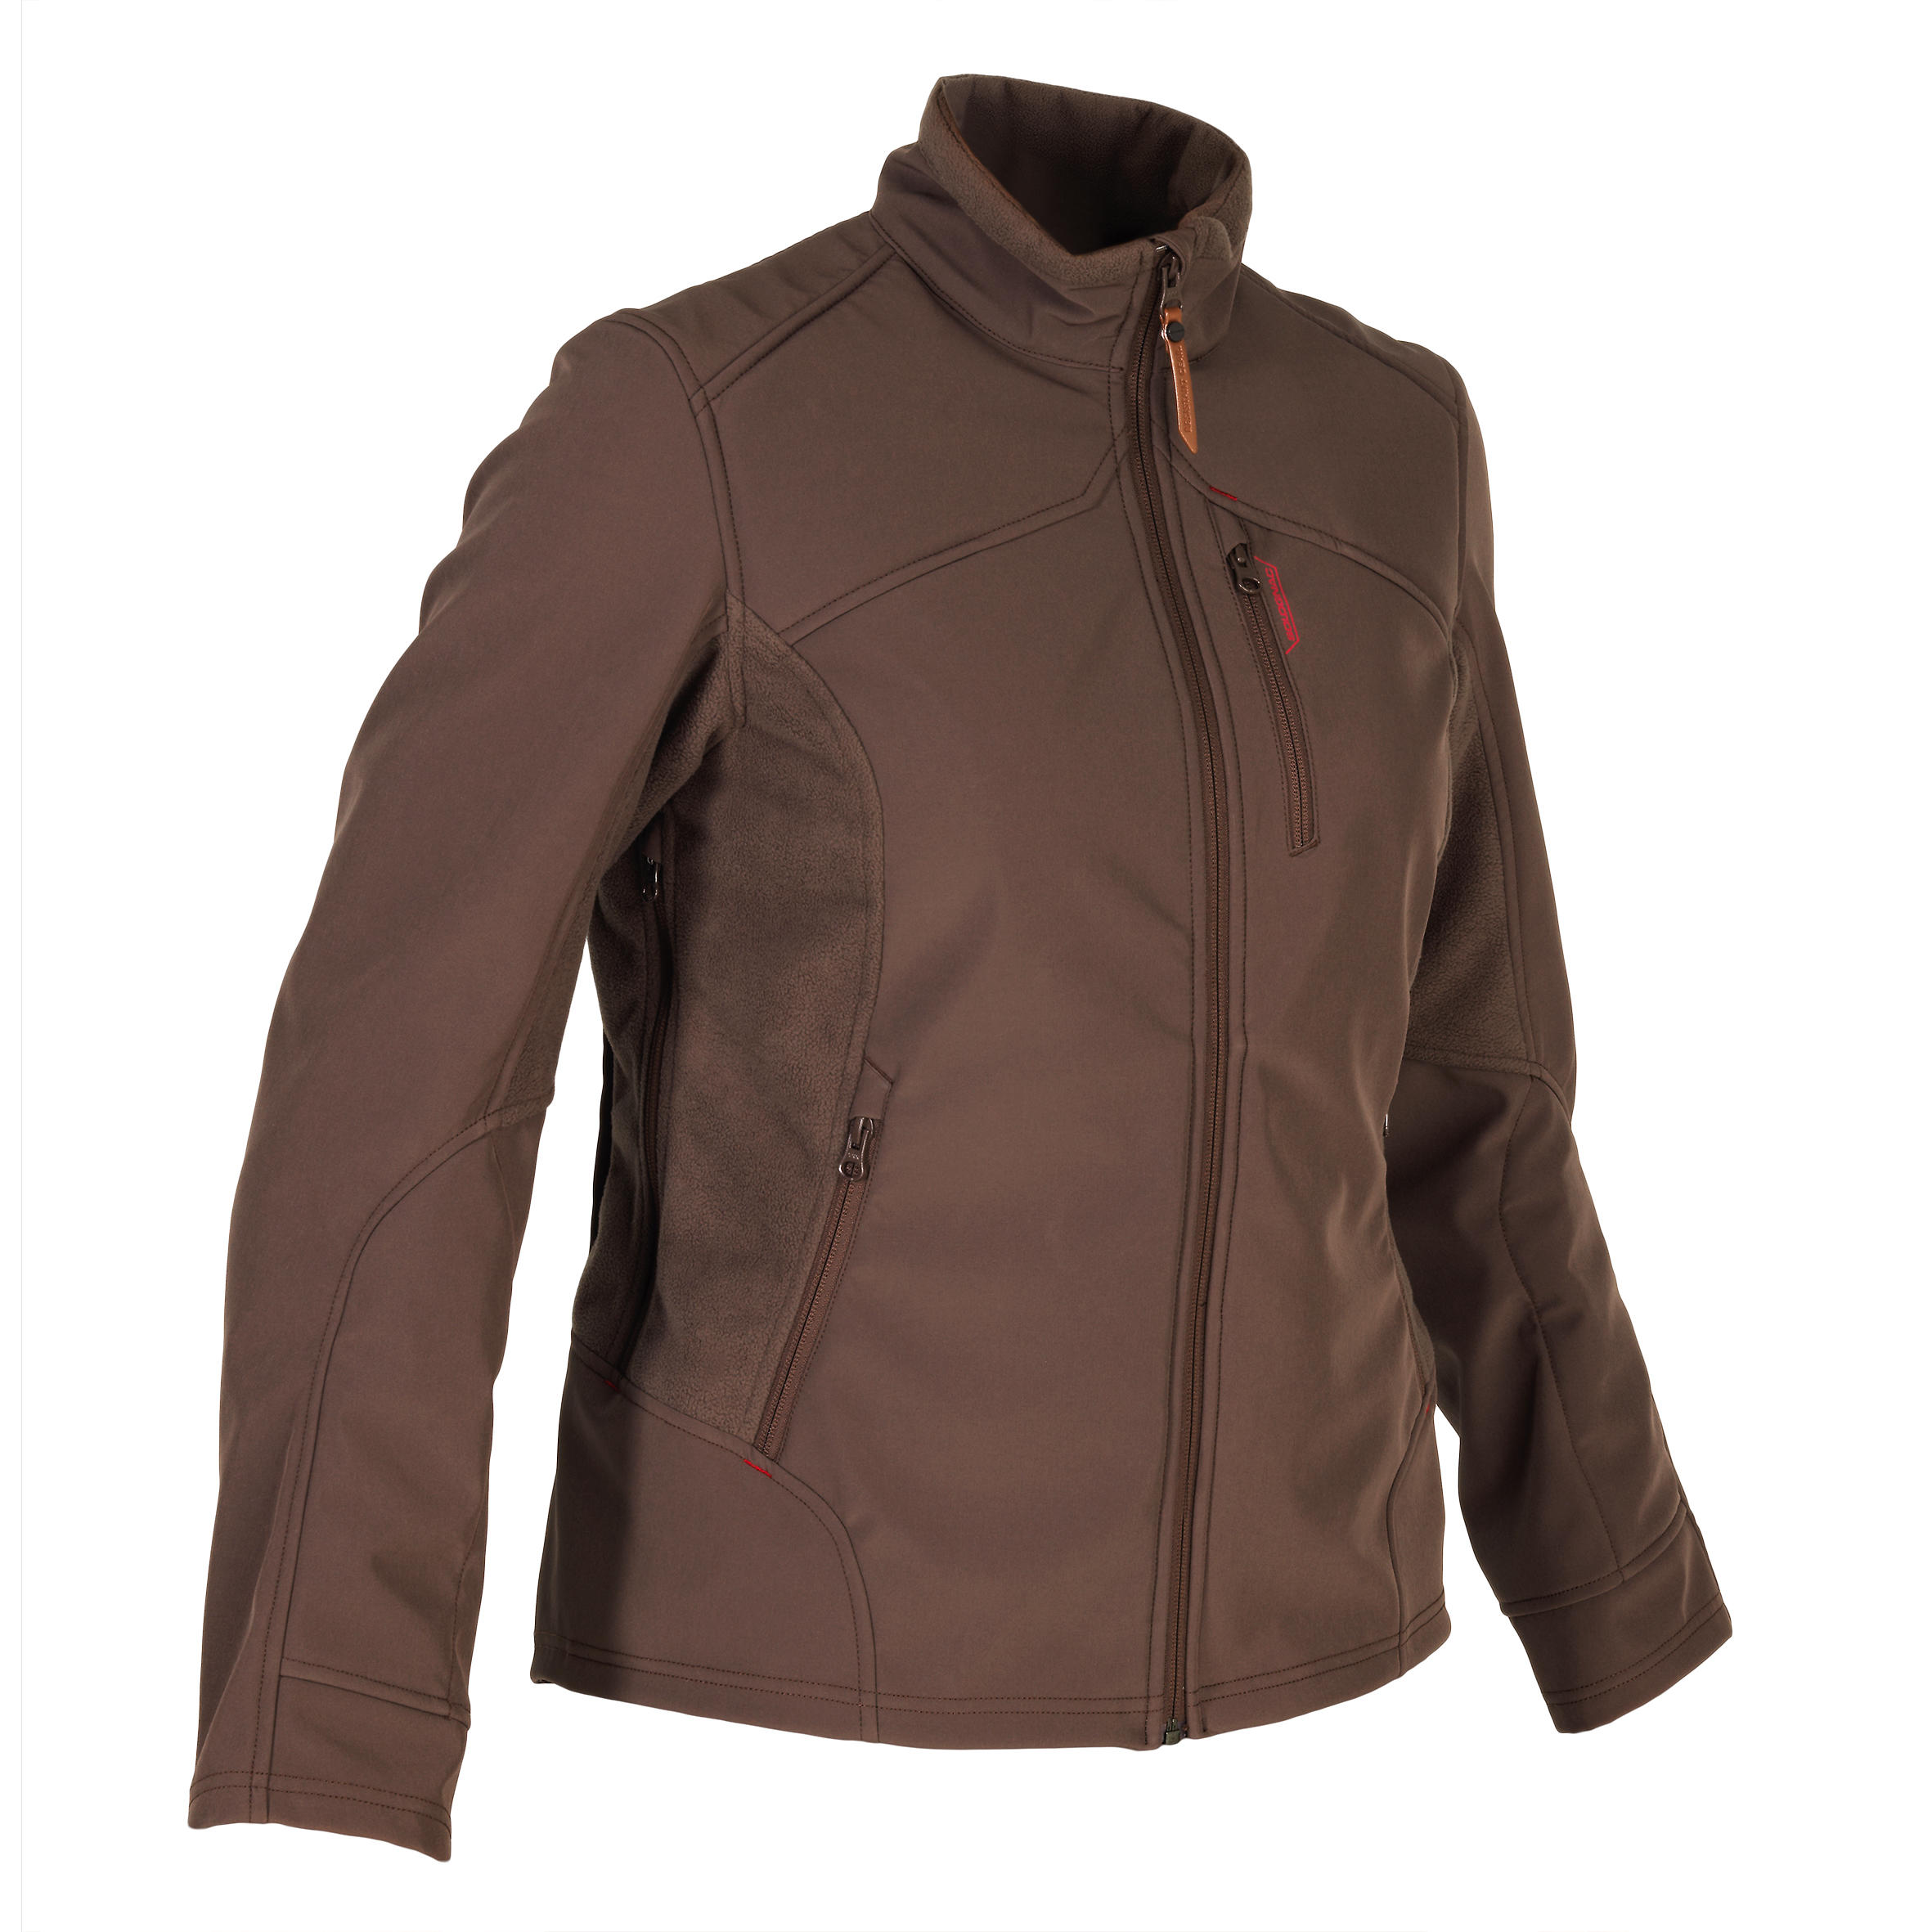 Jachetă SOFTSHELL 500 călduroasă și hidrofobă Maro Damă La Oferta Online decathlon imagine La Oferta Online